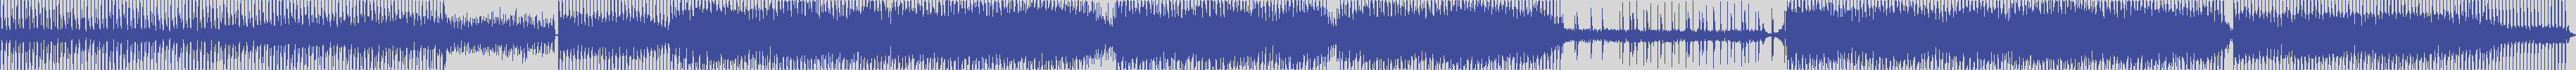 atomic_recordings [AR021] Ivan Pugliares, Reezar - Fenix [Original Mix] audio wave form